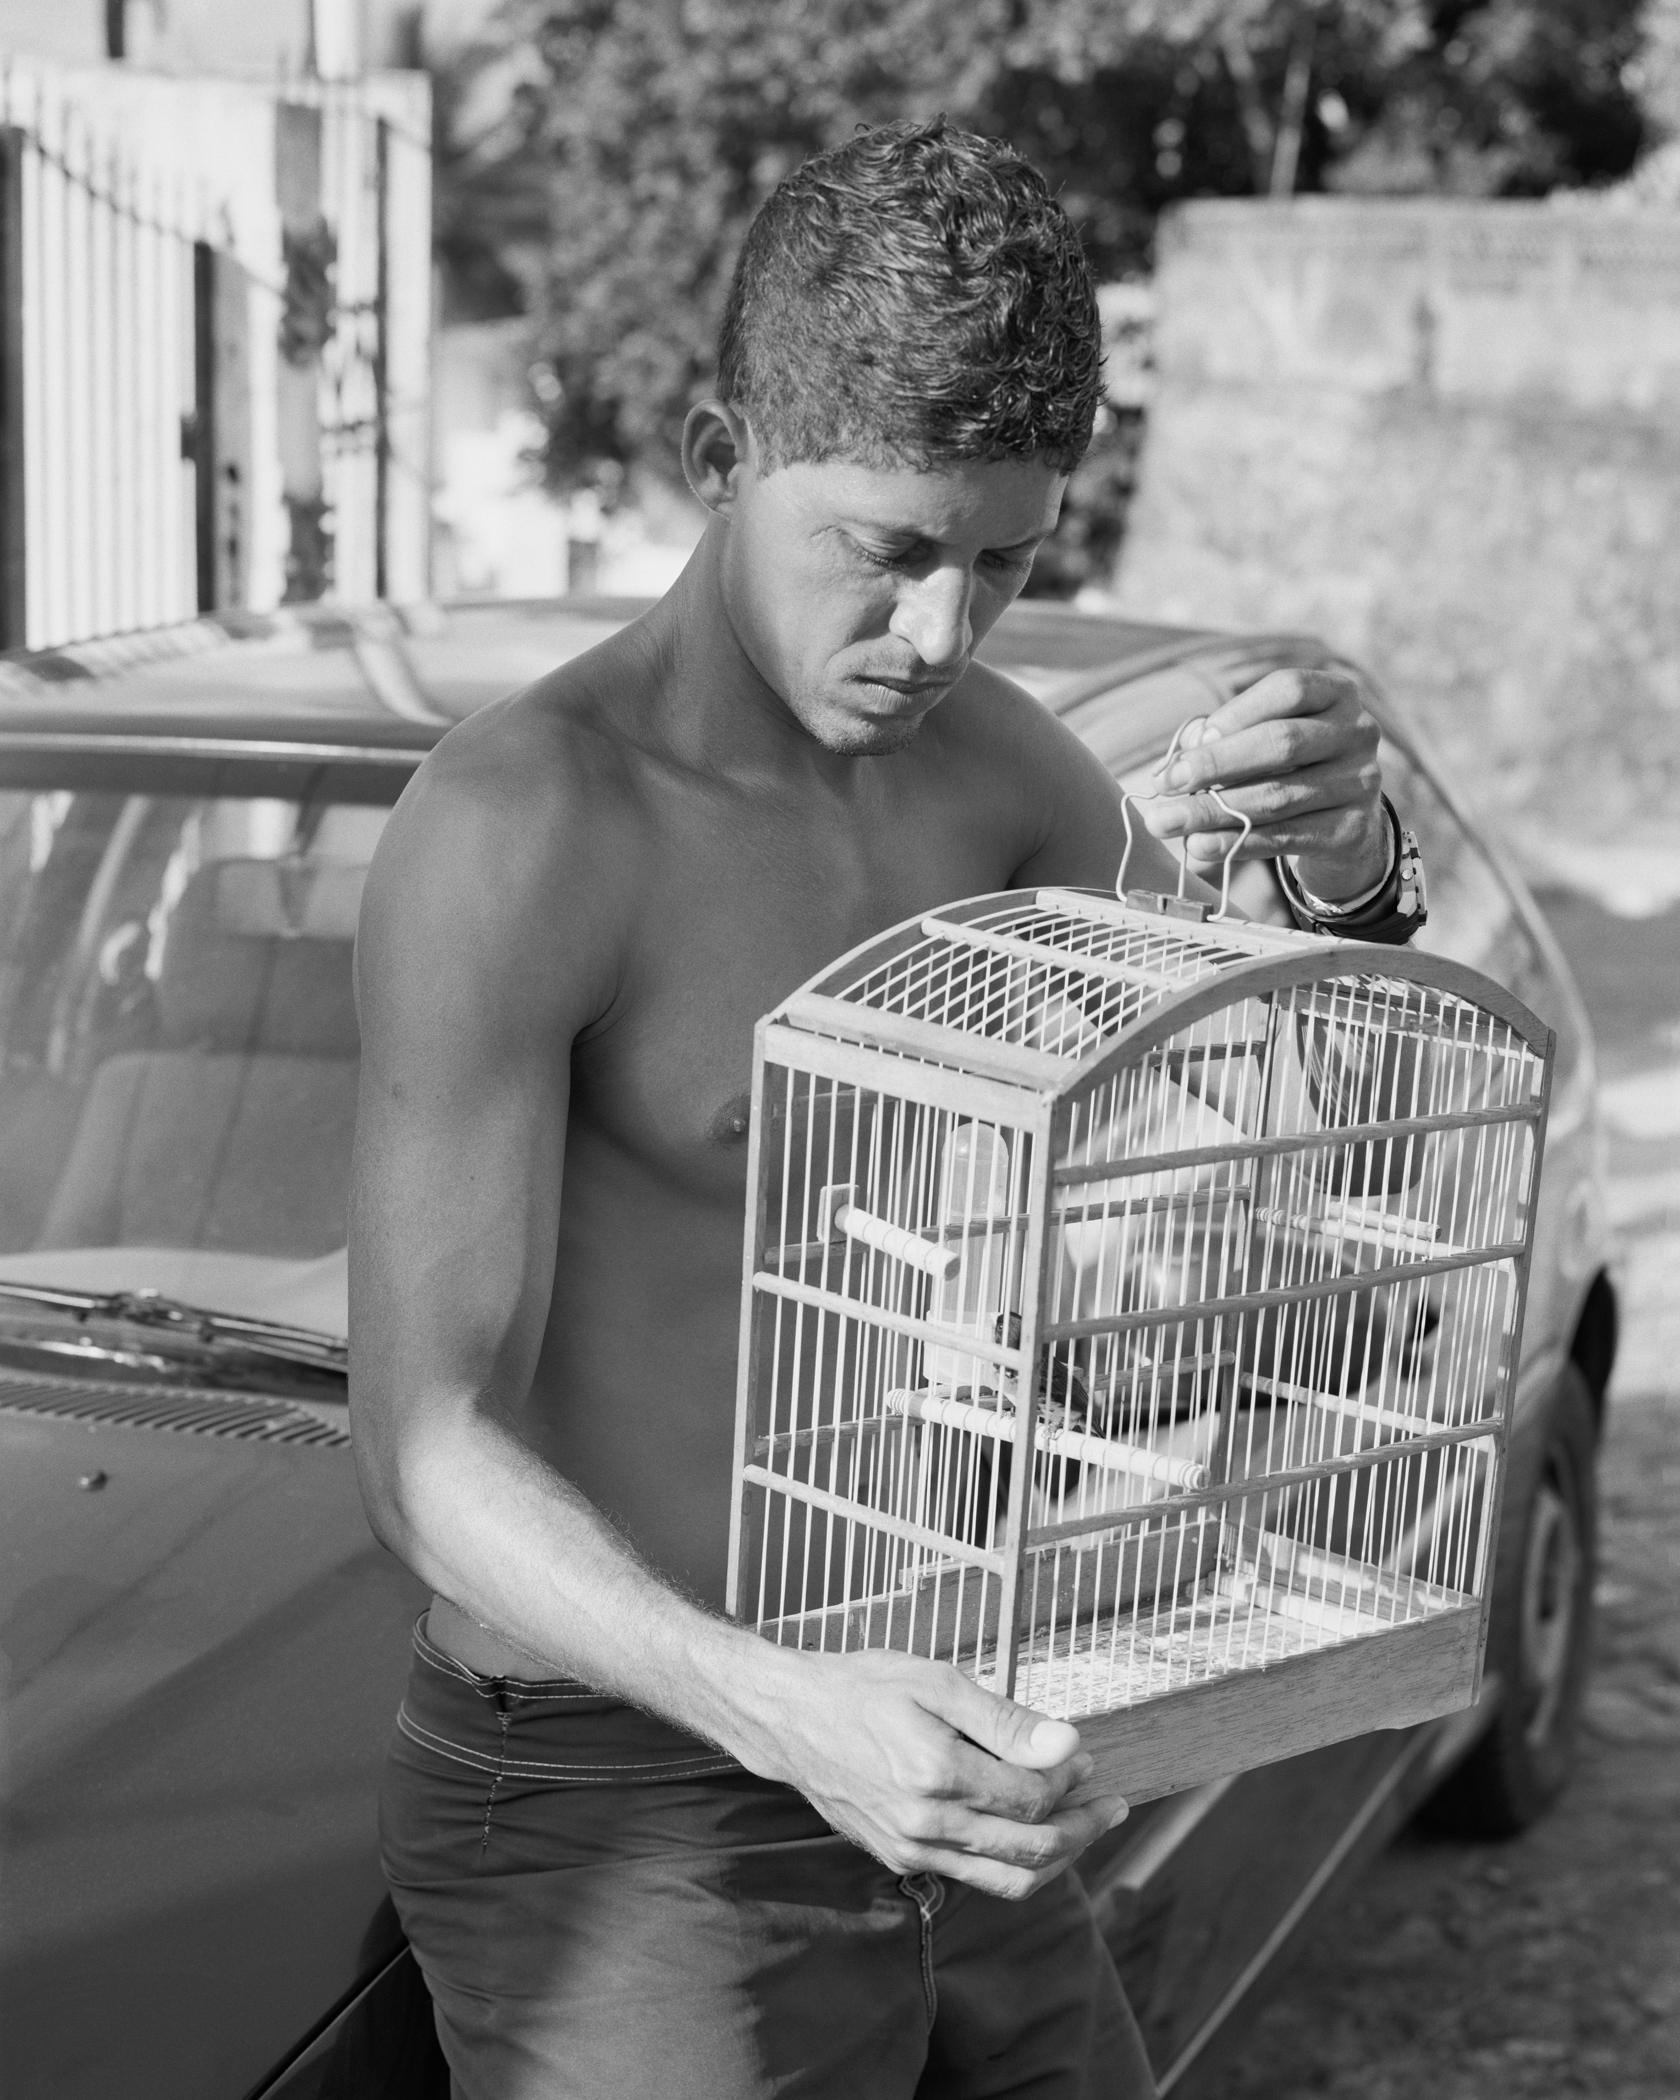  Fábio Santos resting on car with birdcage, March, 2014, Itaparica, Brazil. 2014/2018 